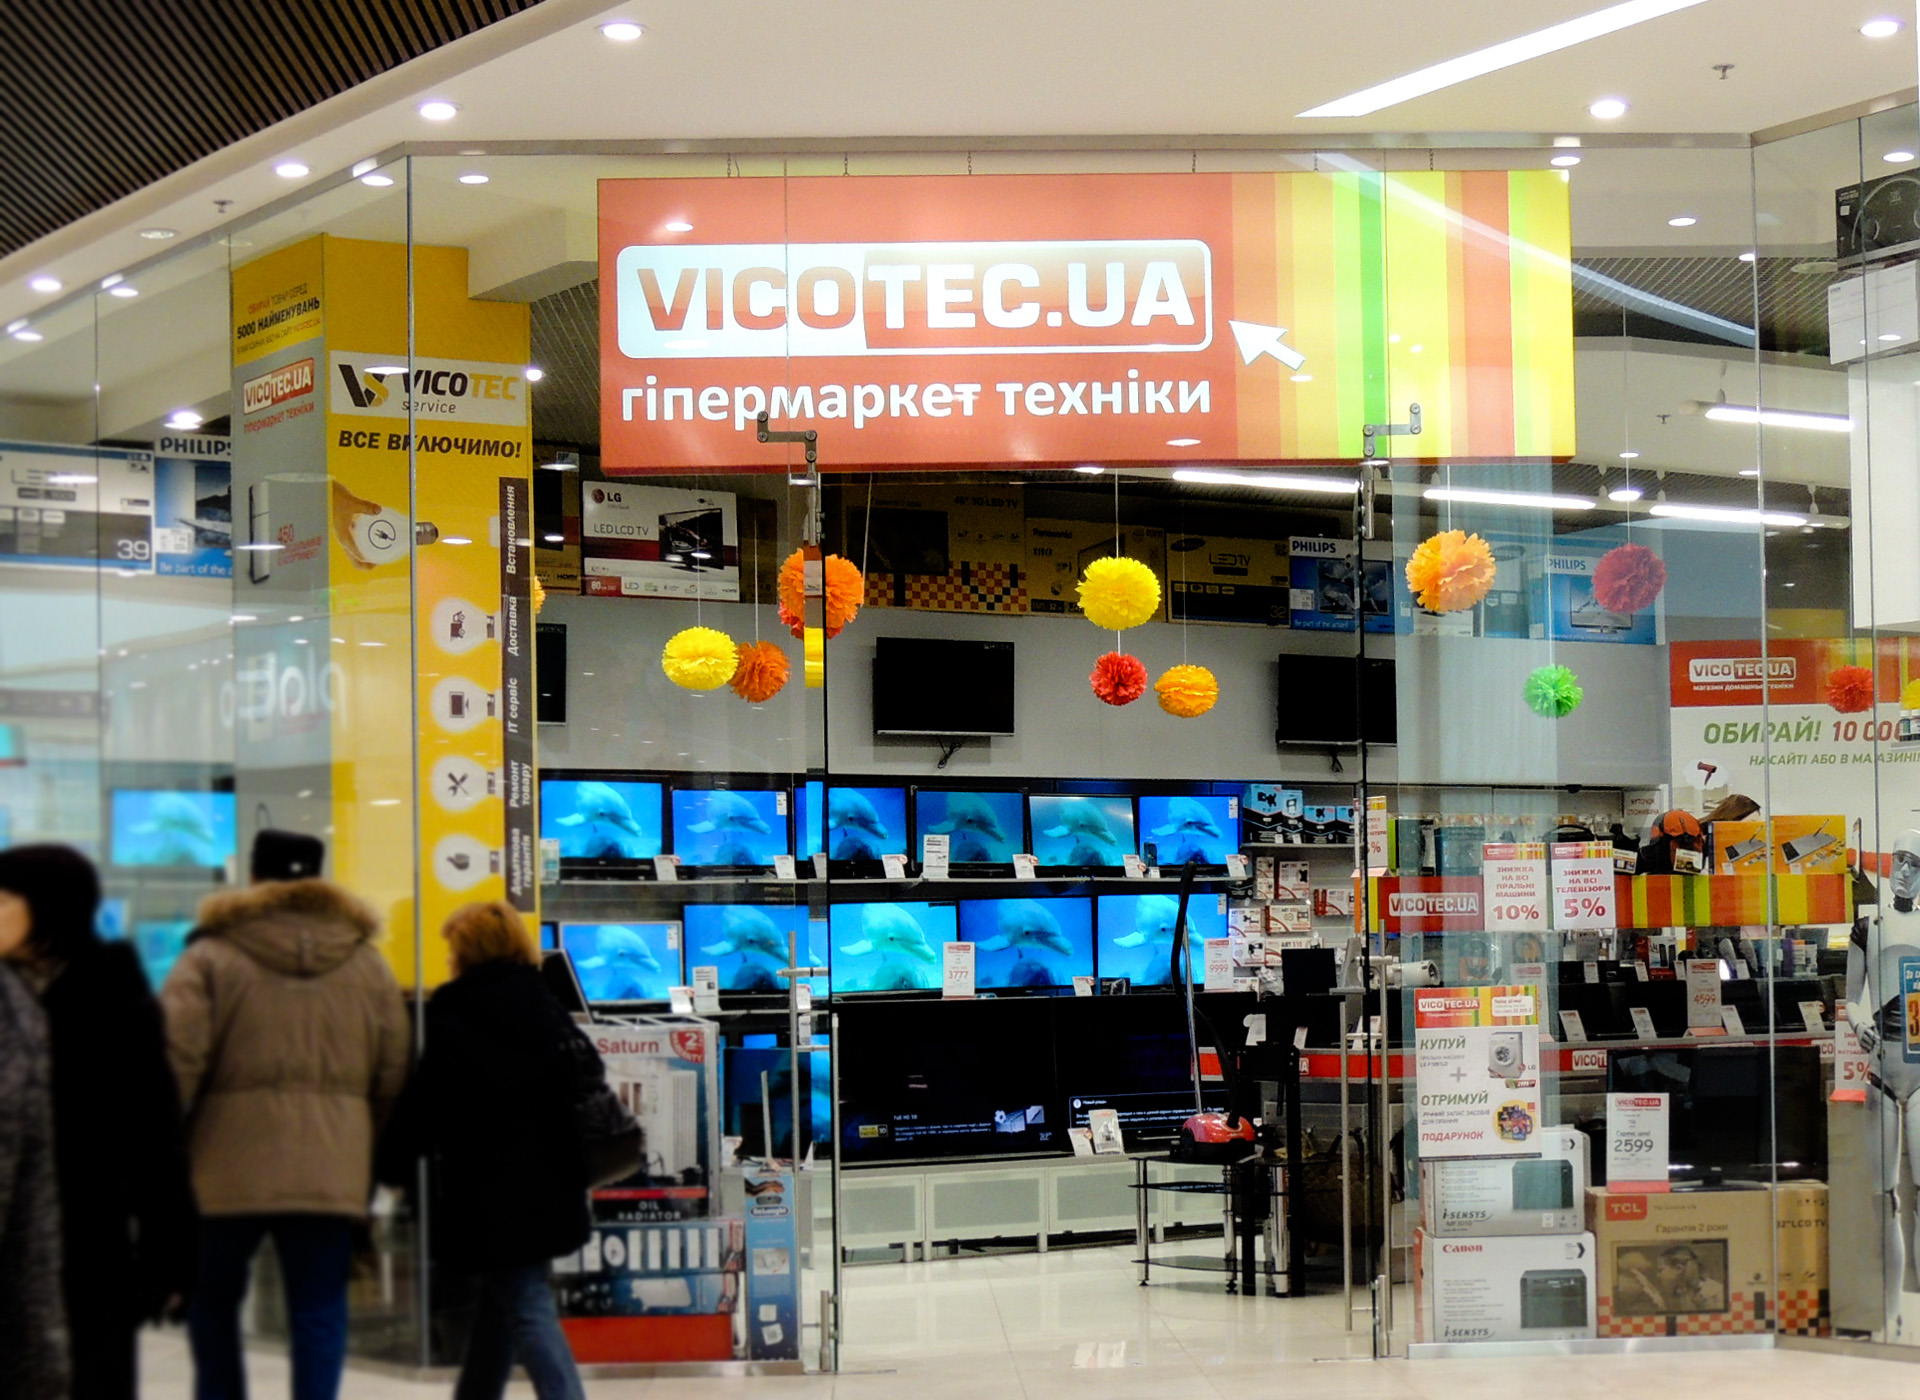 Vicotec гипермаркет техники дизайн фирменного стиля